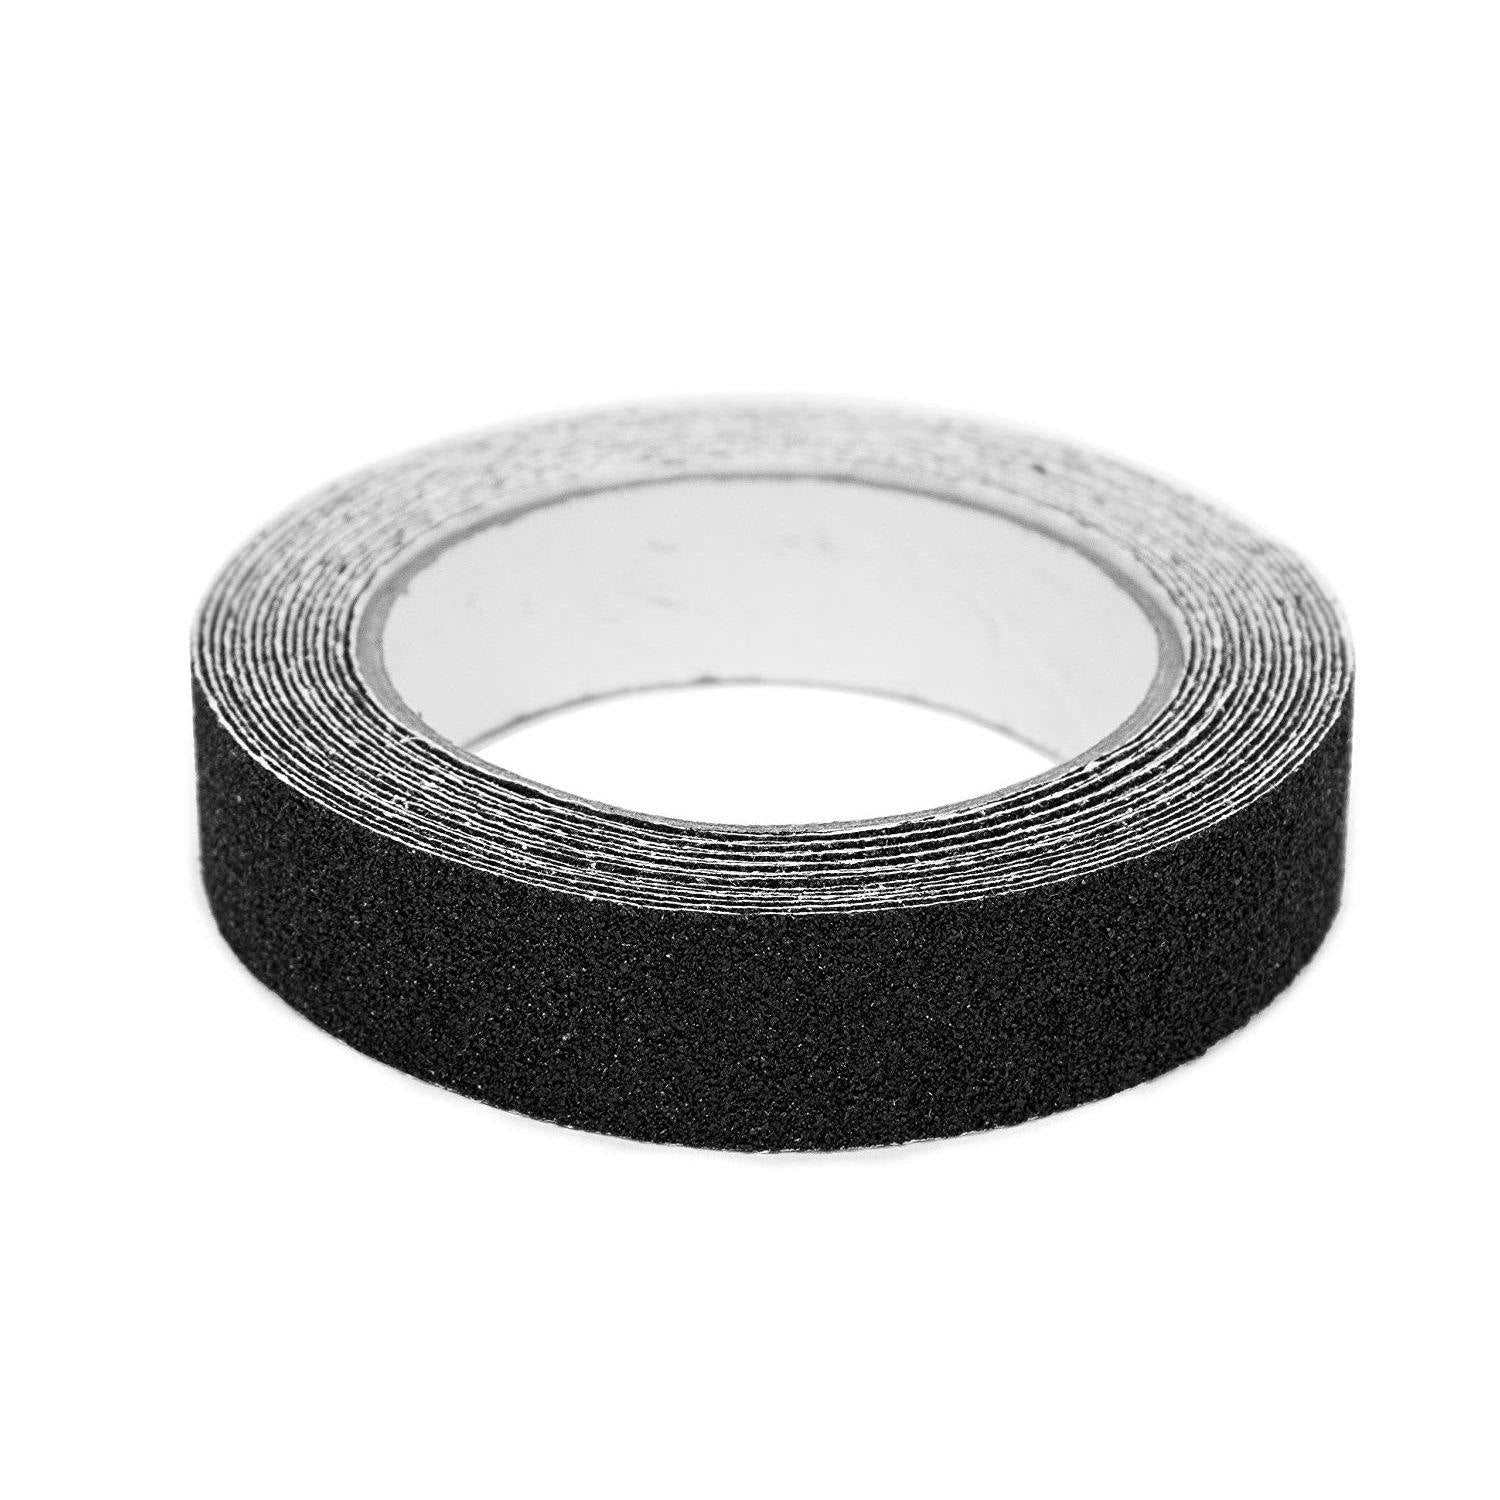 Buy Anti Skid tape Waterproof tape SIZE -(18Mx25MM) (Black